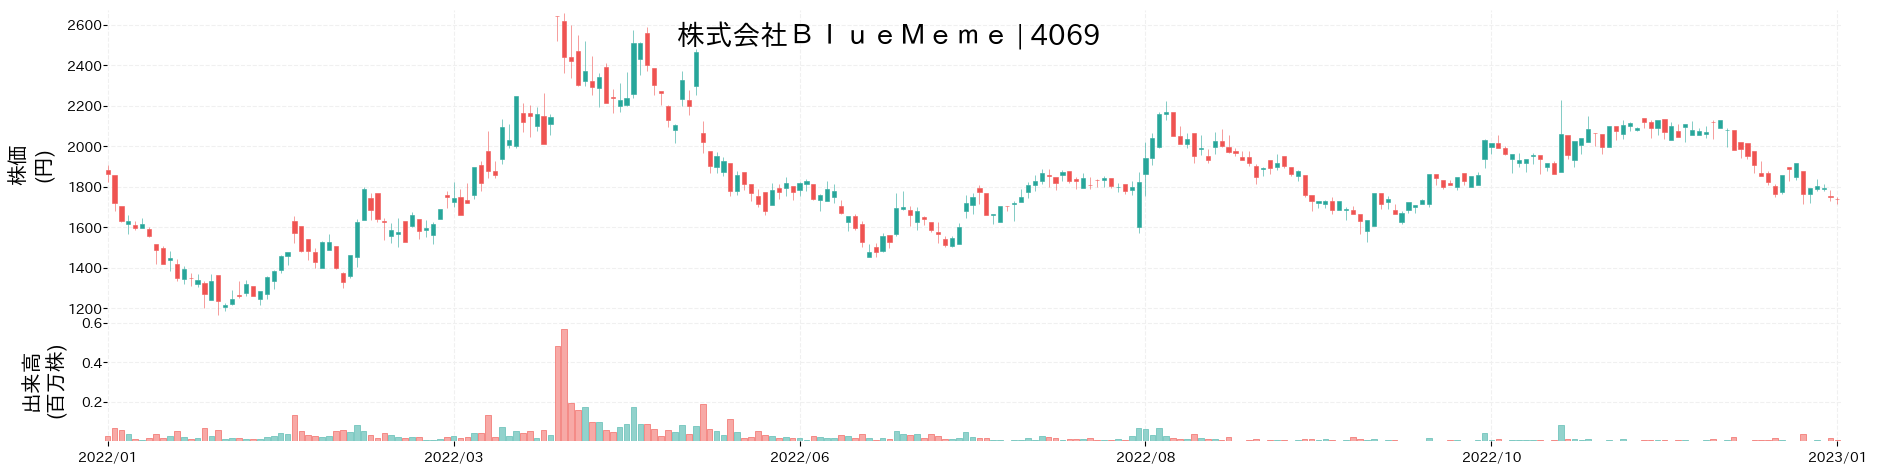 BlueMemeの株価推移(2022)